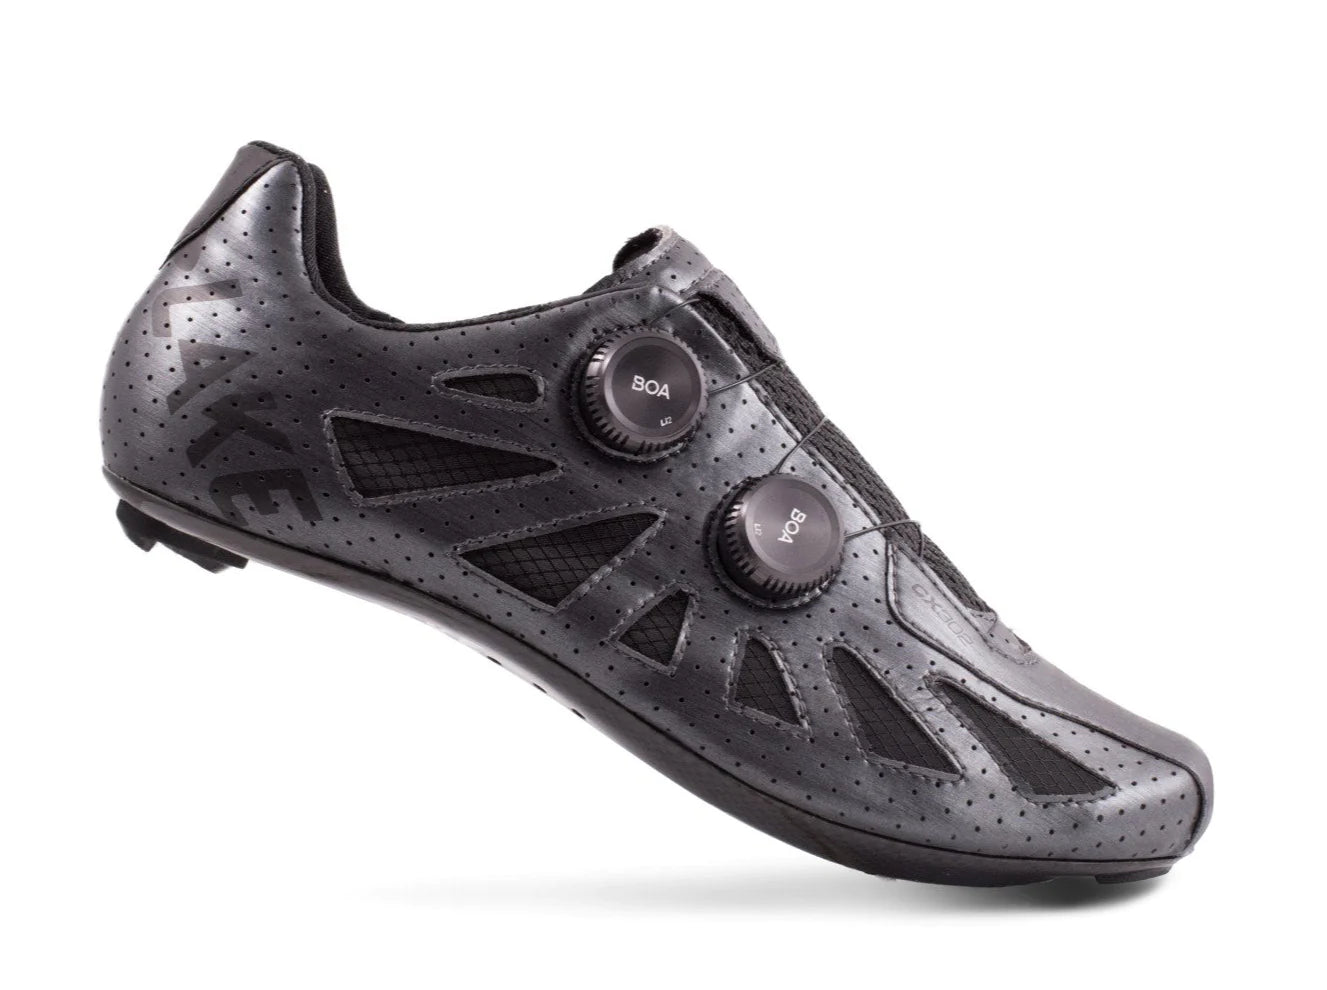 Lake CX302 Road Cycling Shoes